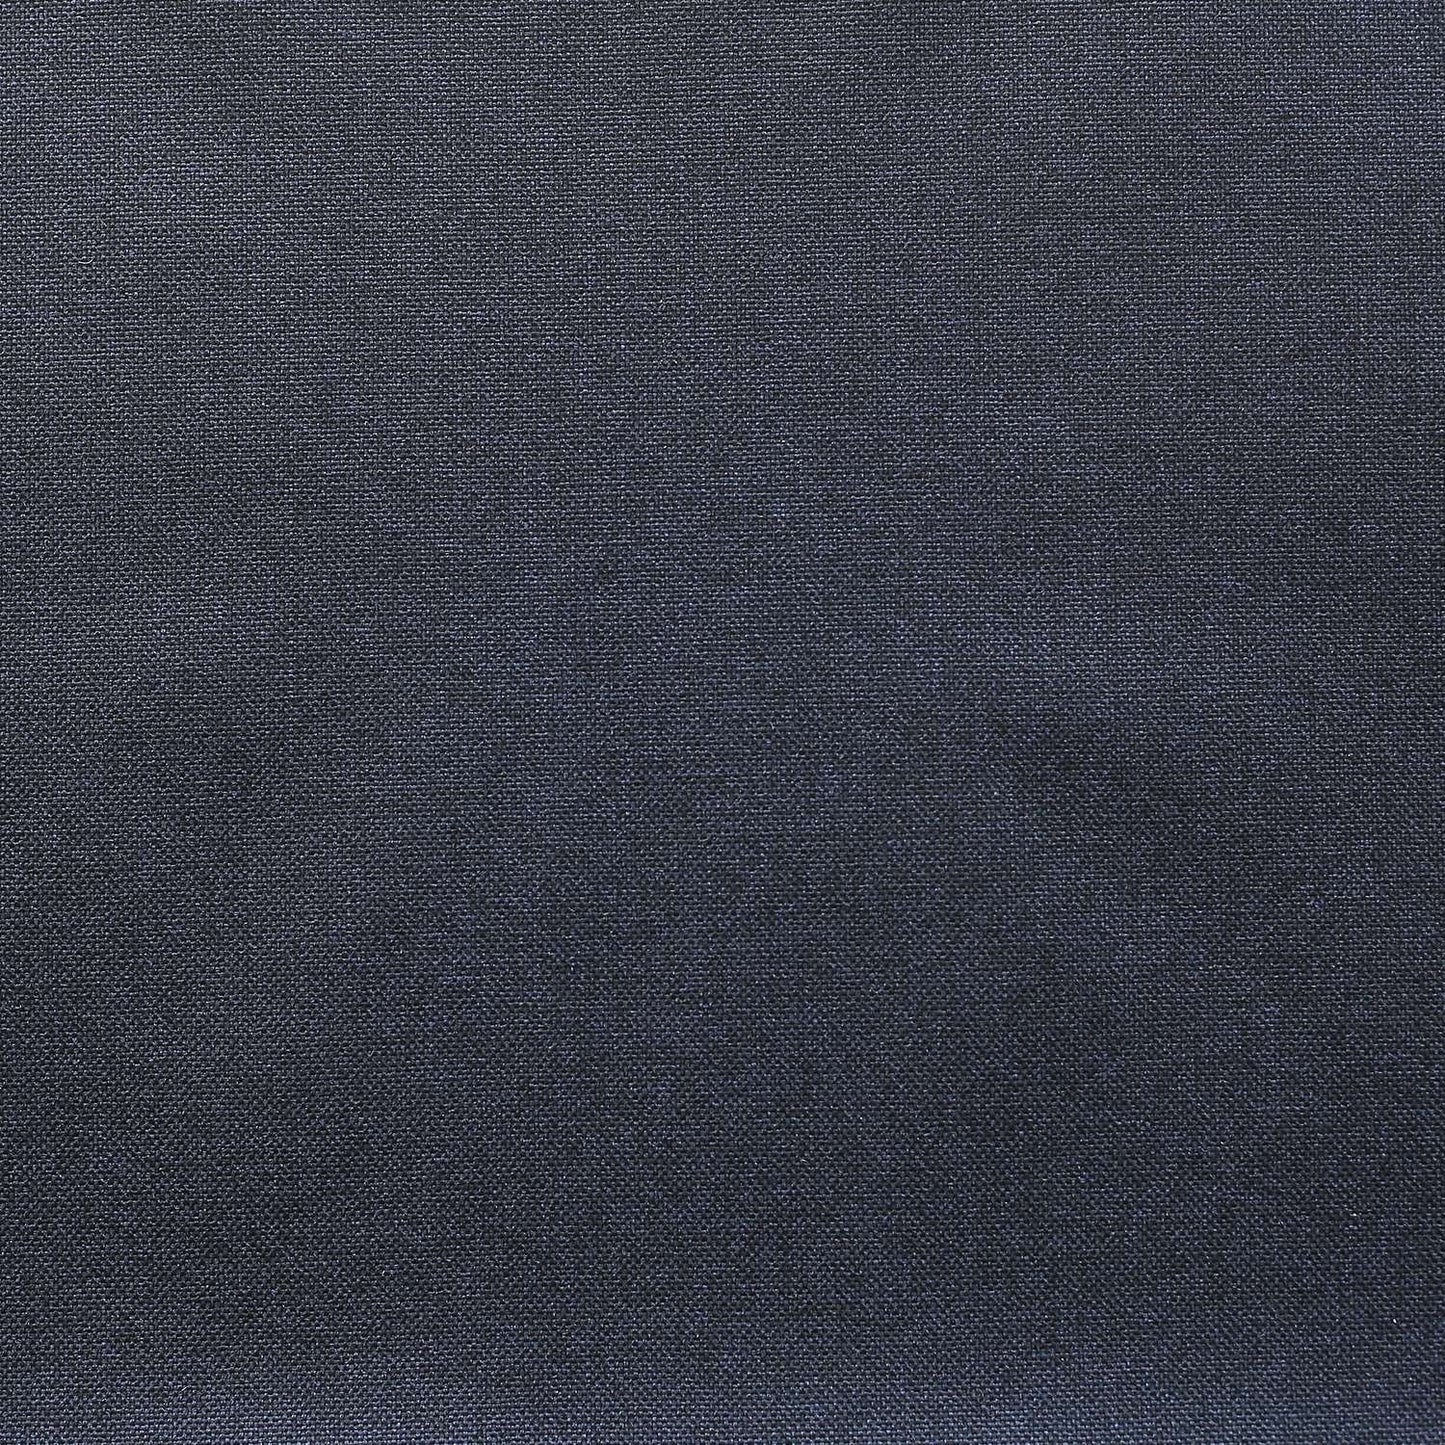 Set Of 4 Blue And Black Lumbar Pillow Covers